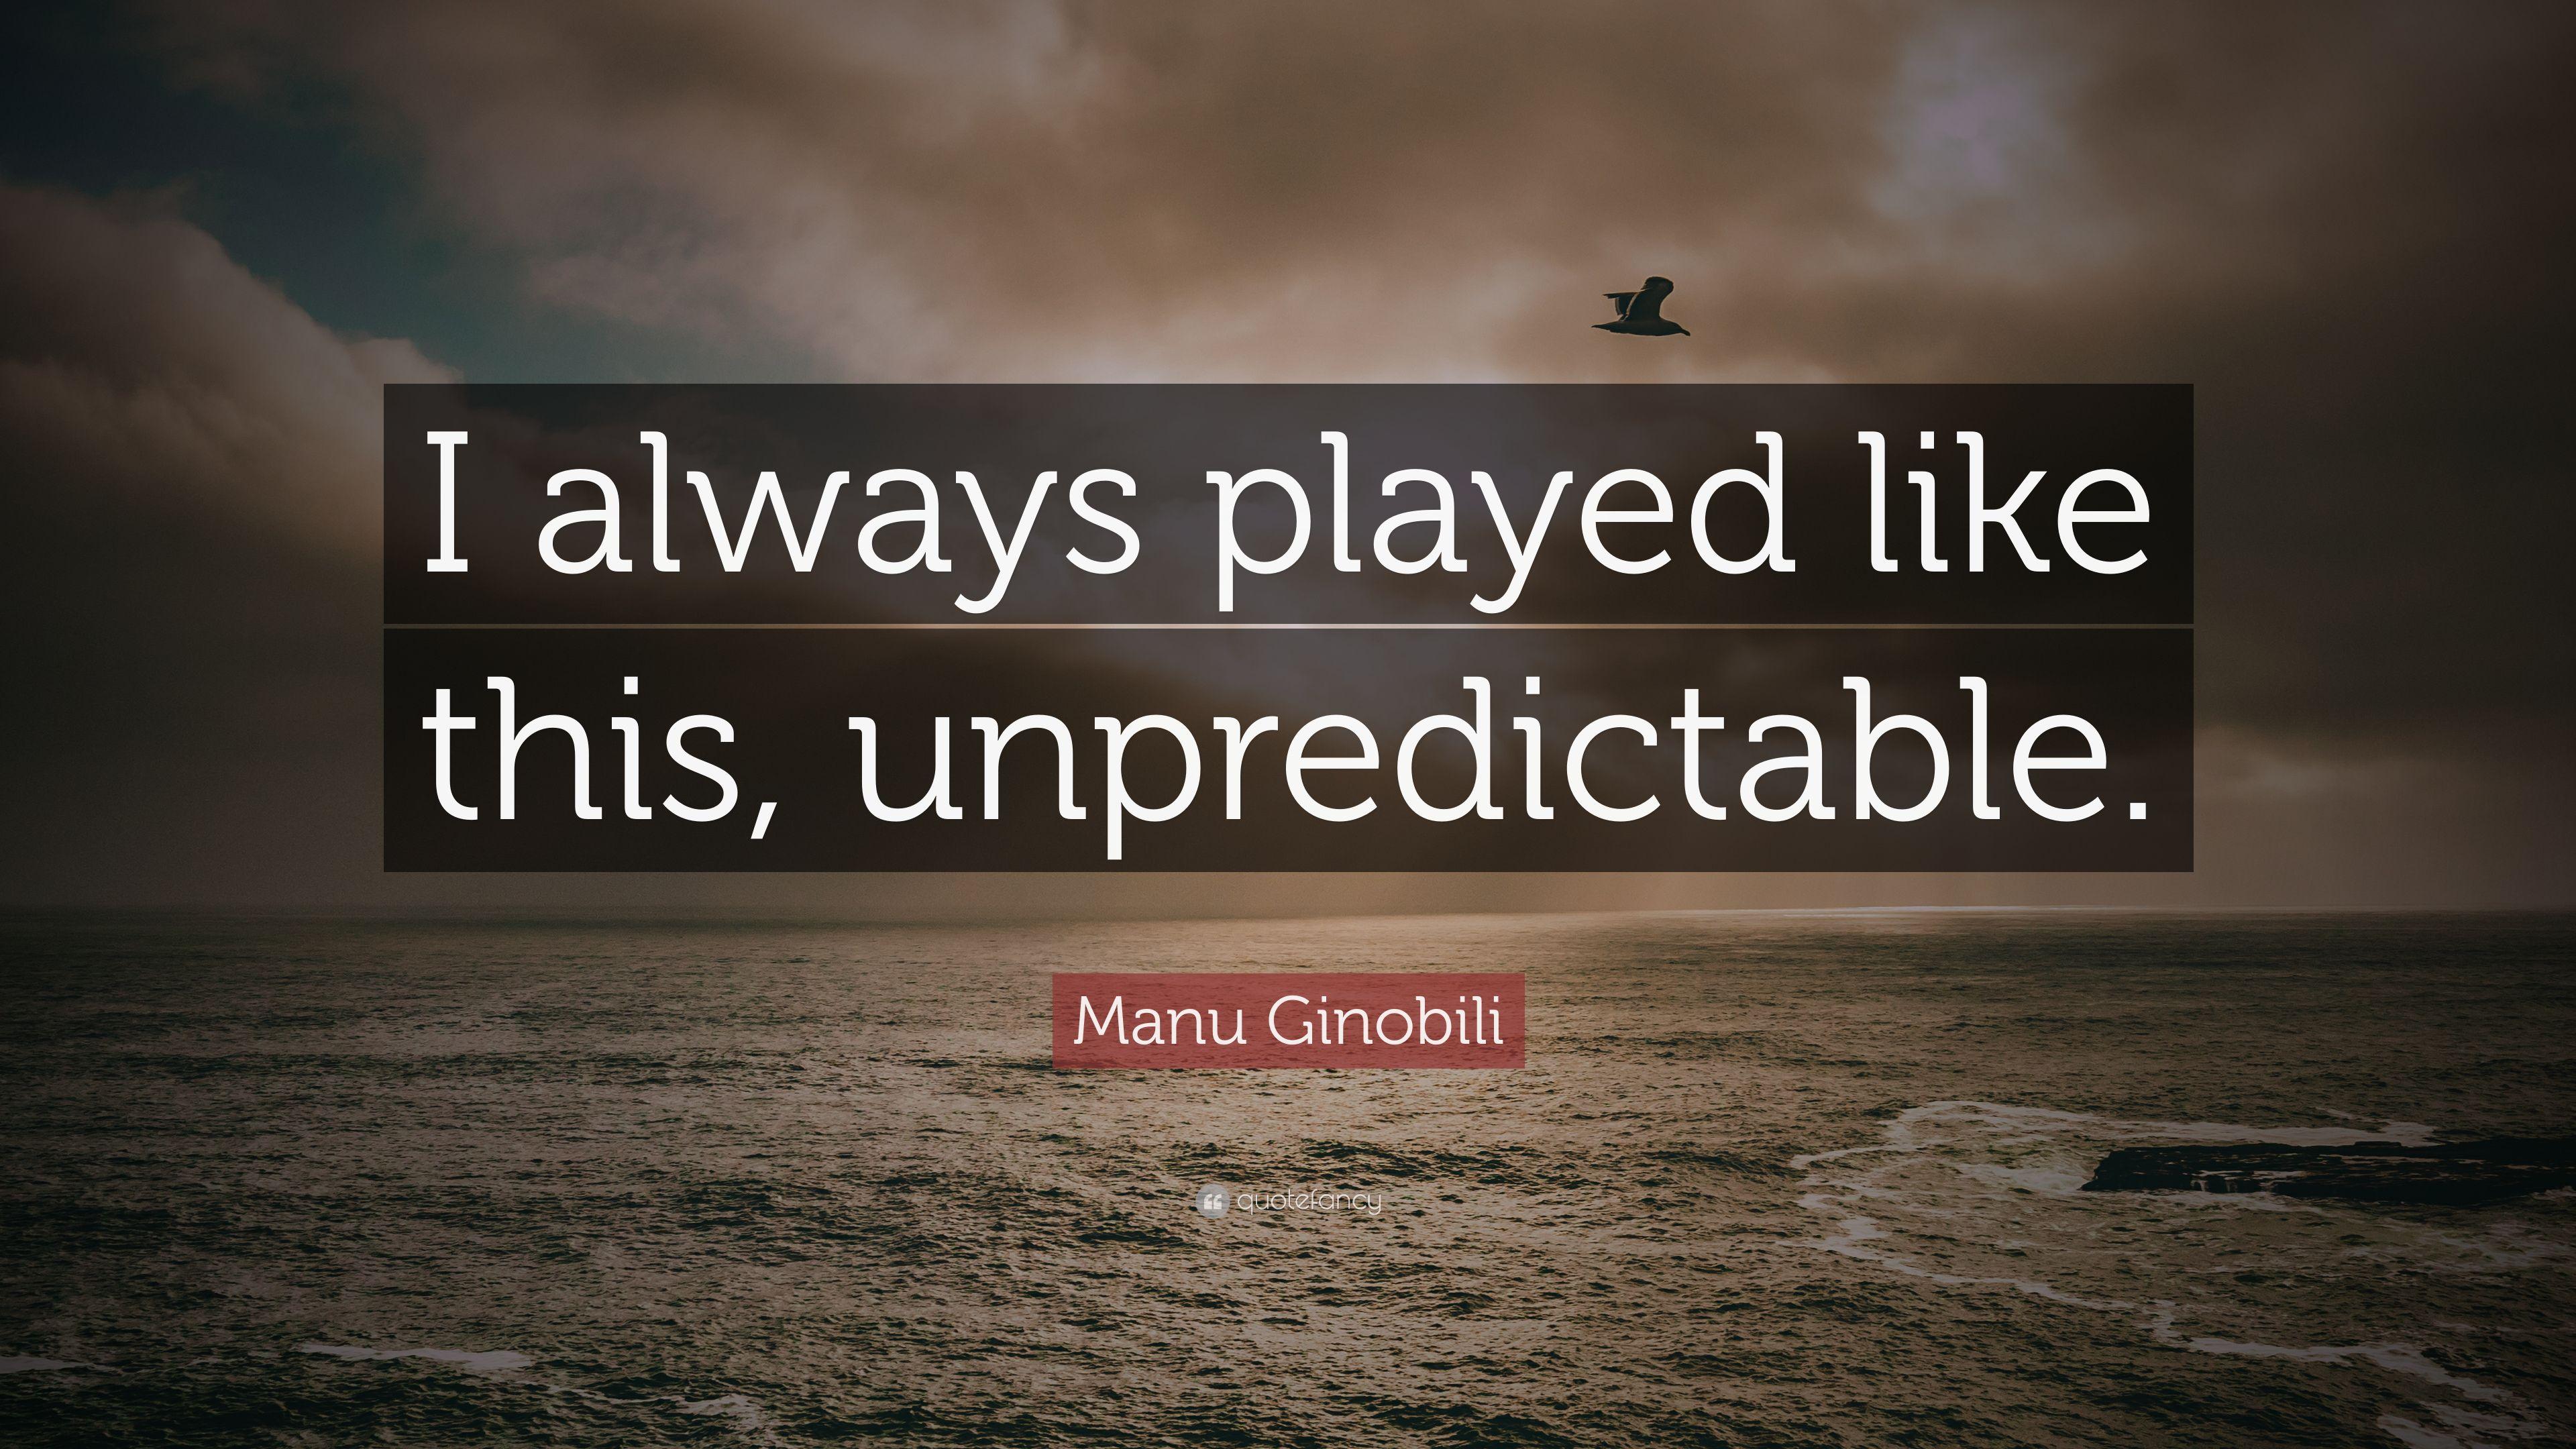 Manu Ginobili Quote: “I always played like this, unpredictable.” 7